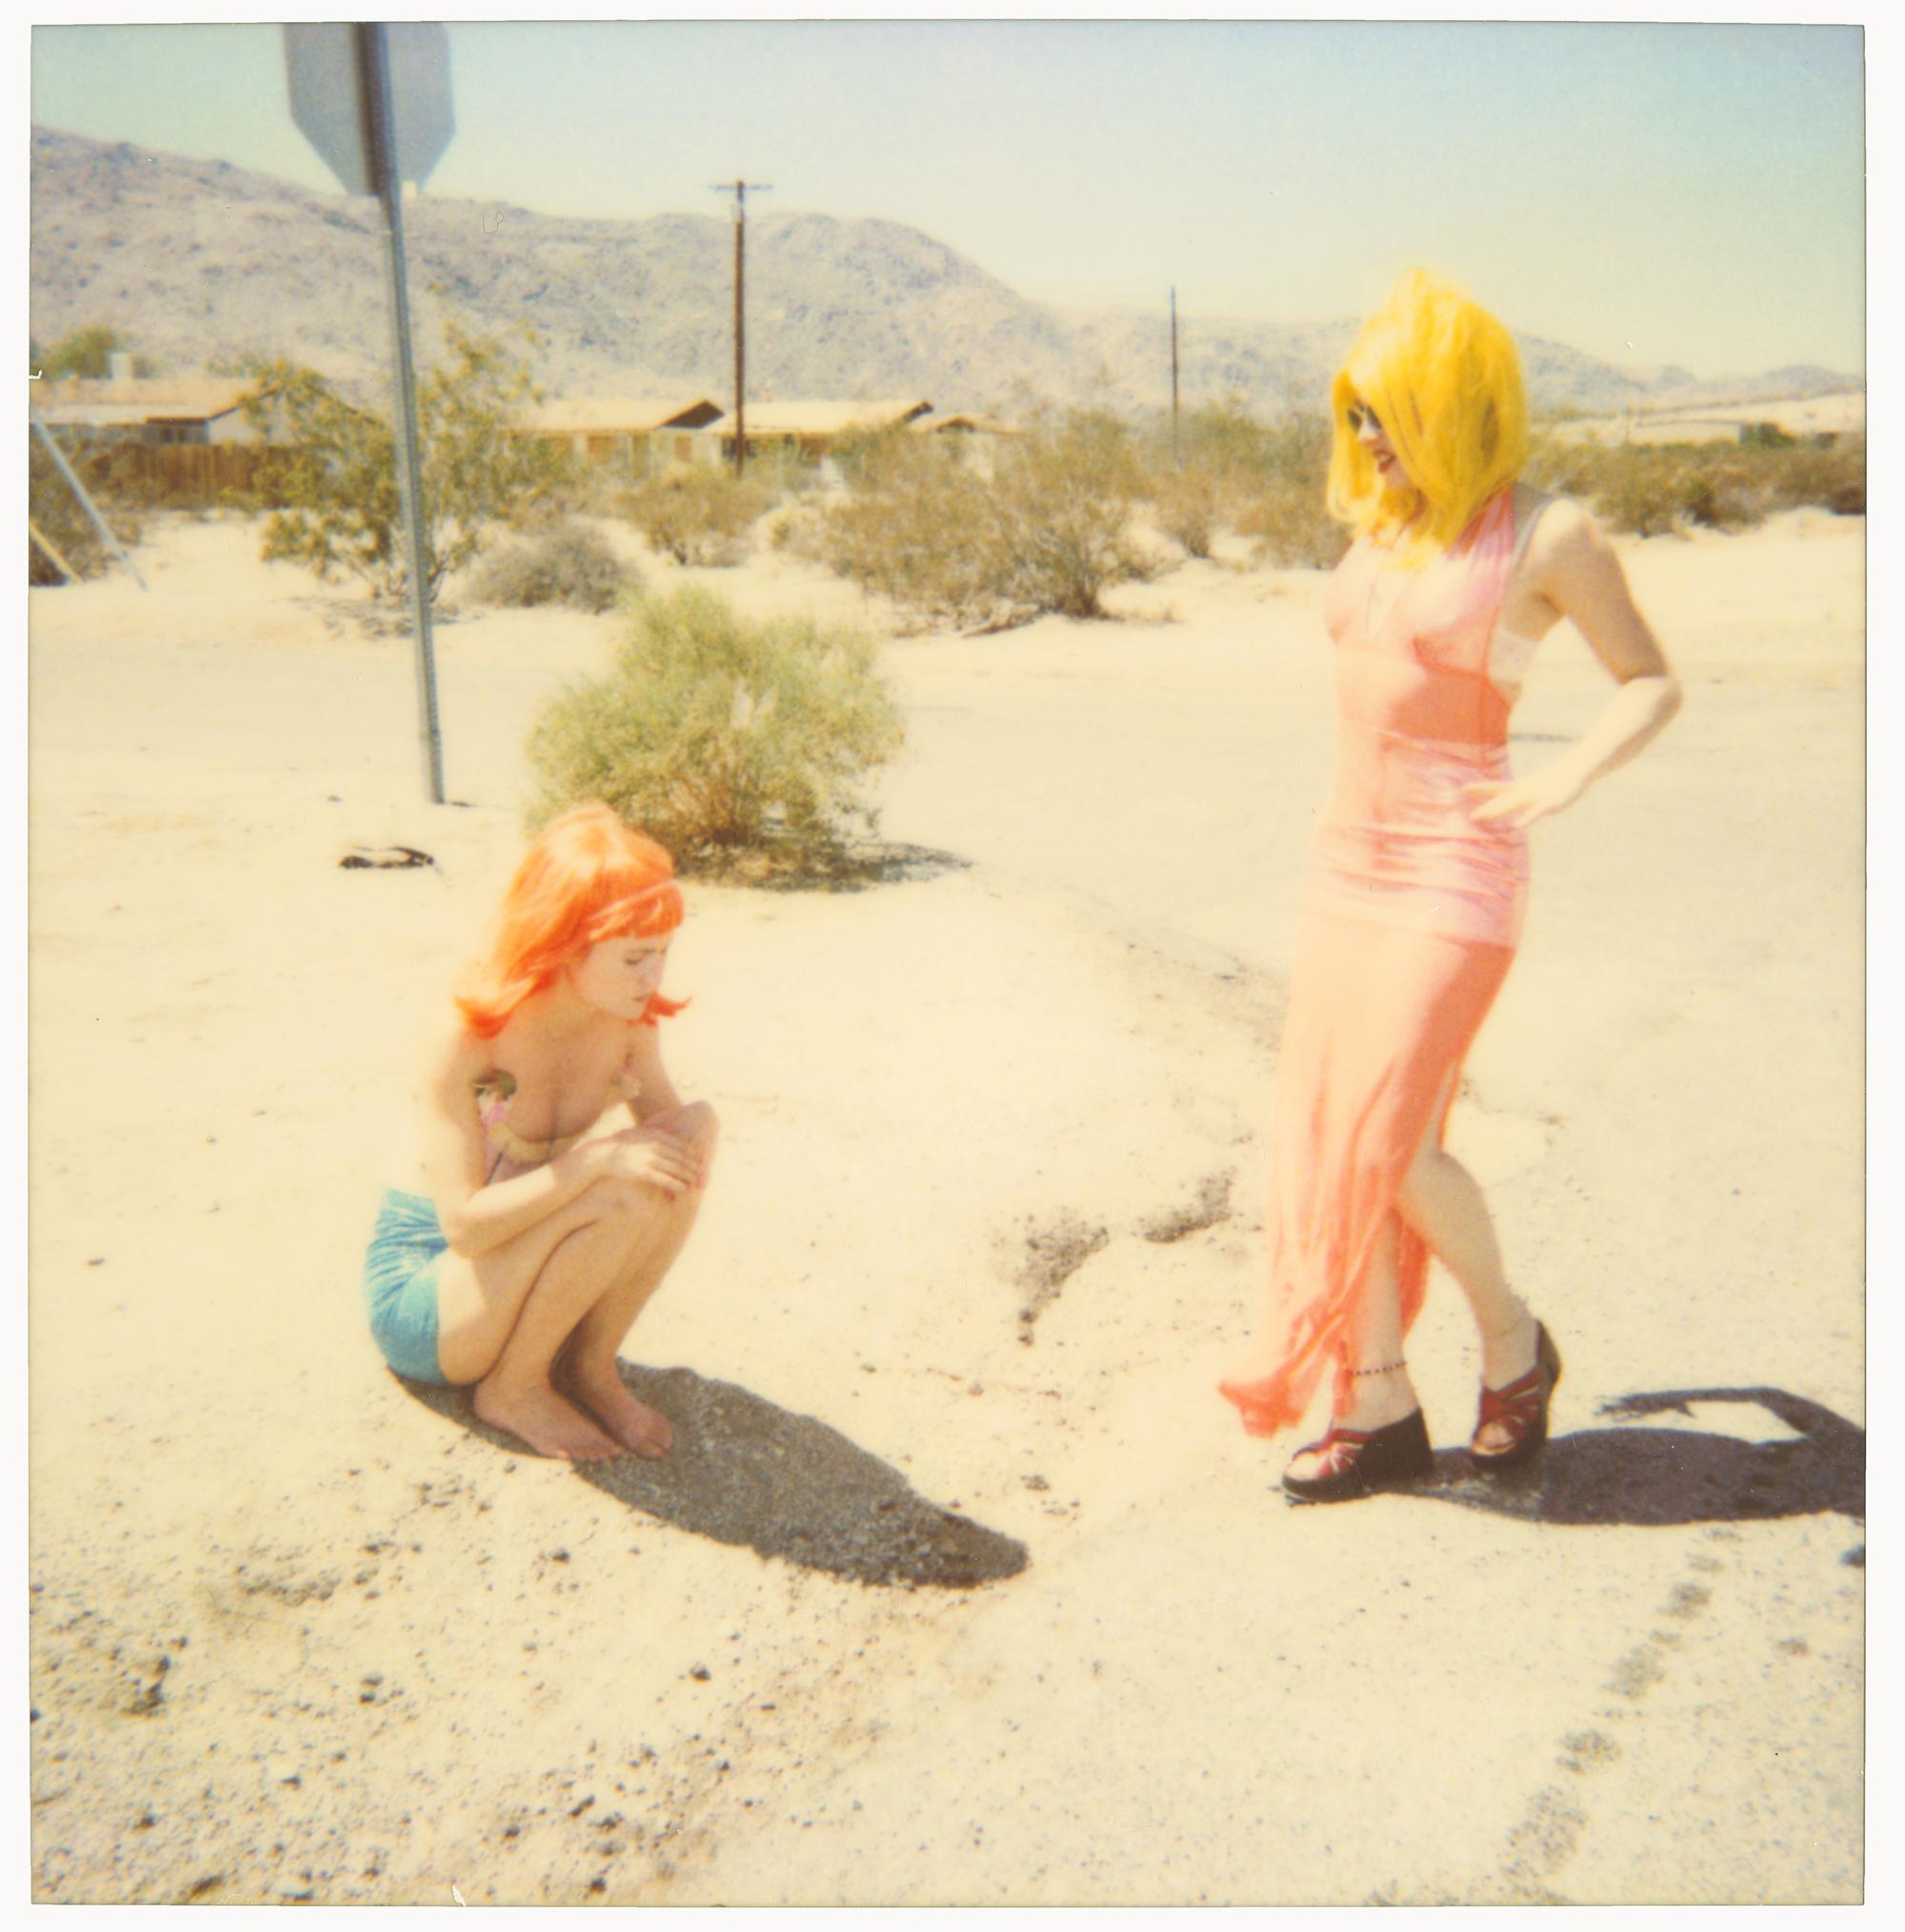 Radha and Max on Dirt Road (29 Palms, CA) - 20x20cm each, Polaroid, Contemporary - Photograph by Stefanie Schneider